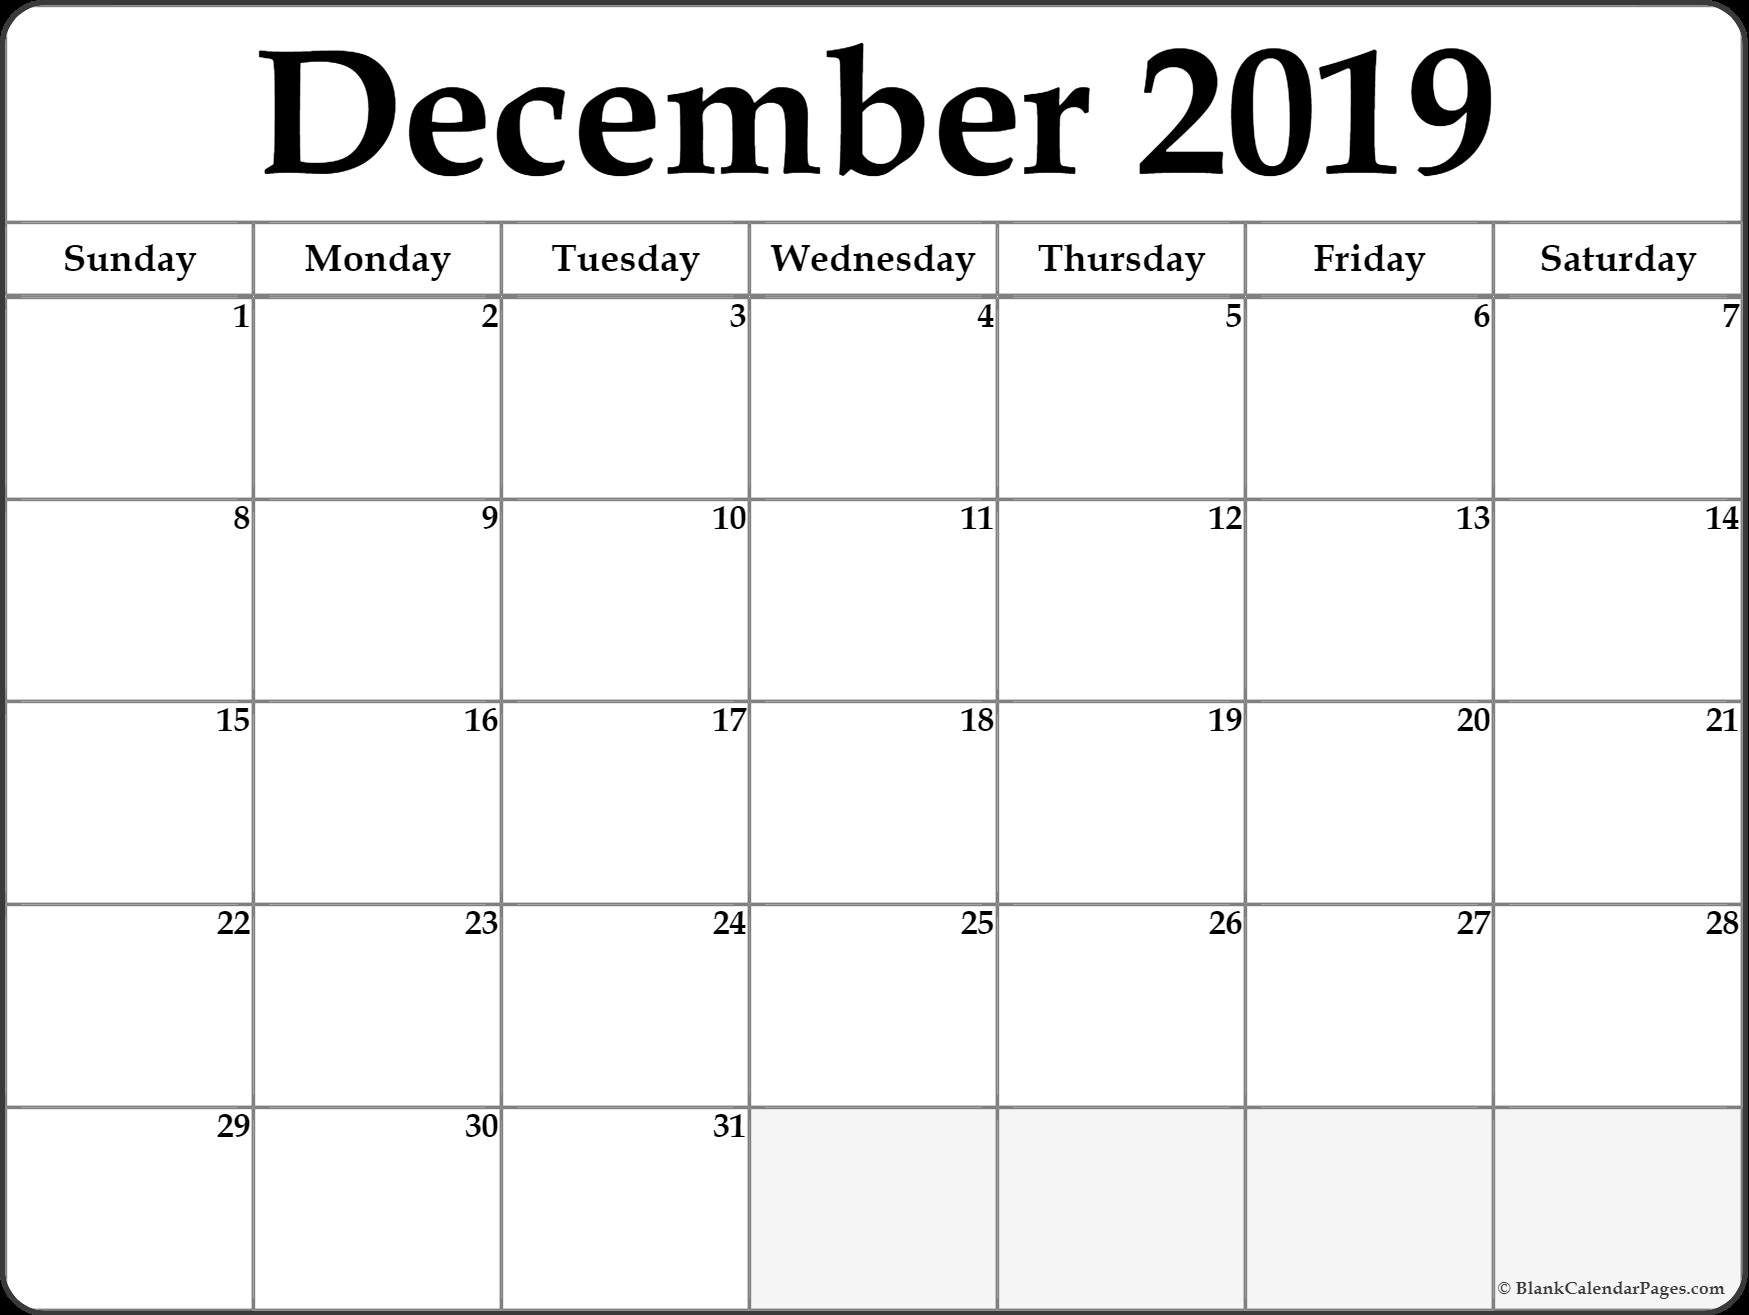 december 2019 calendar printable templates site provides